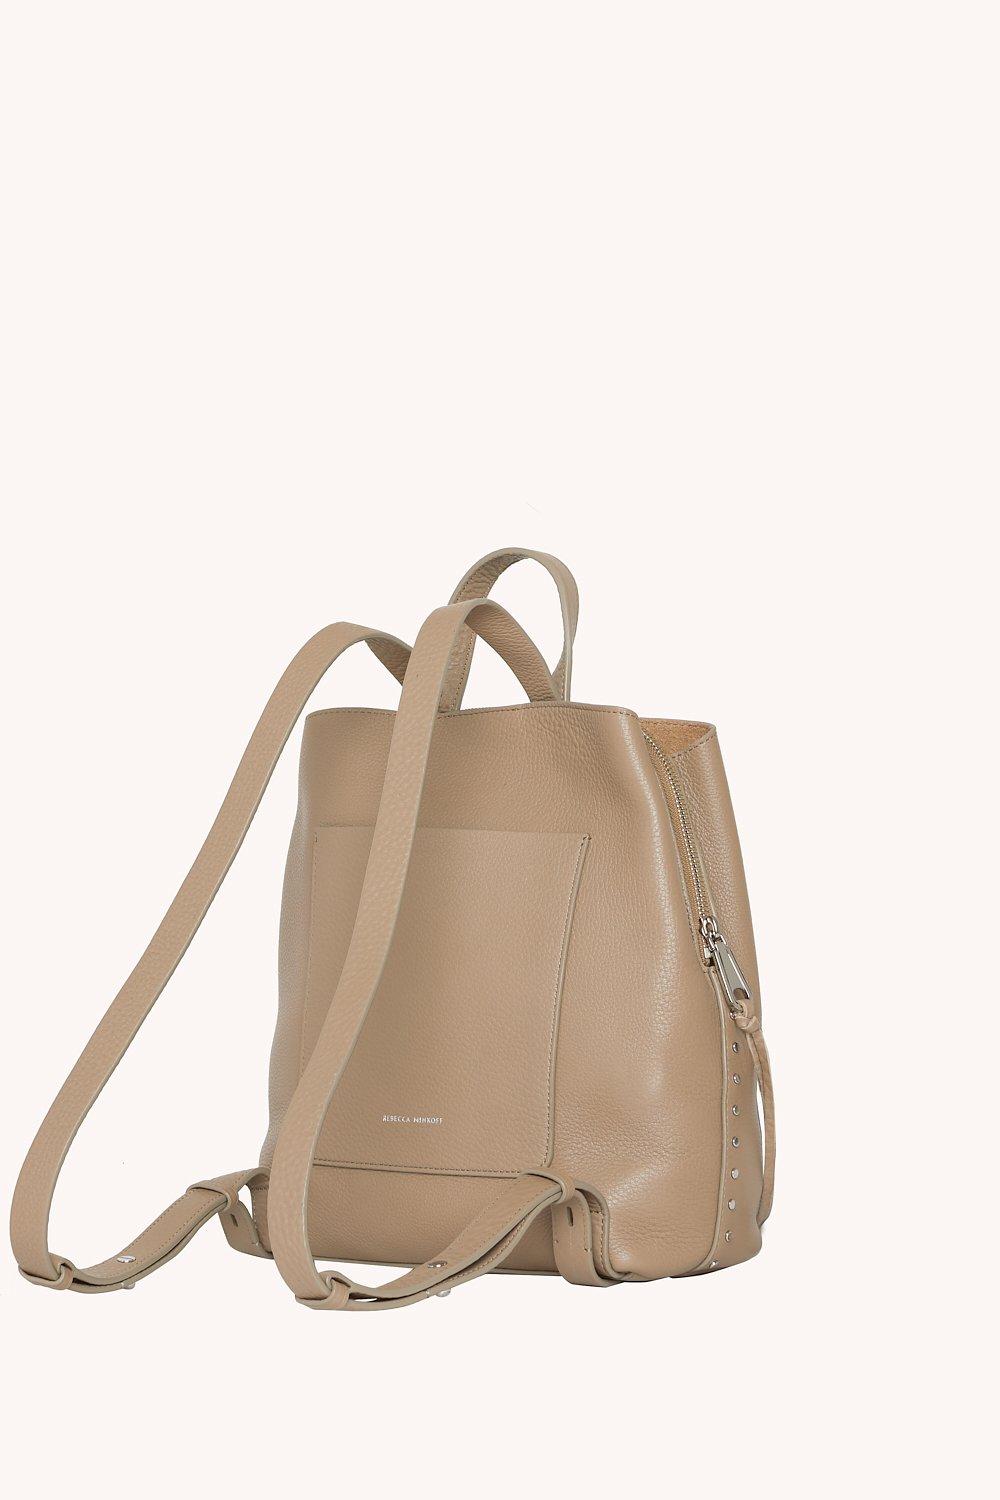 Sale > minkoff darren backpack > in stock